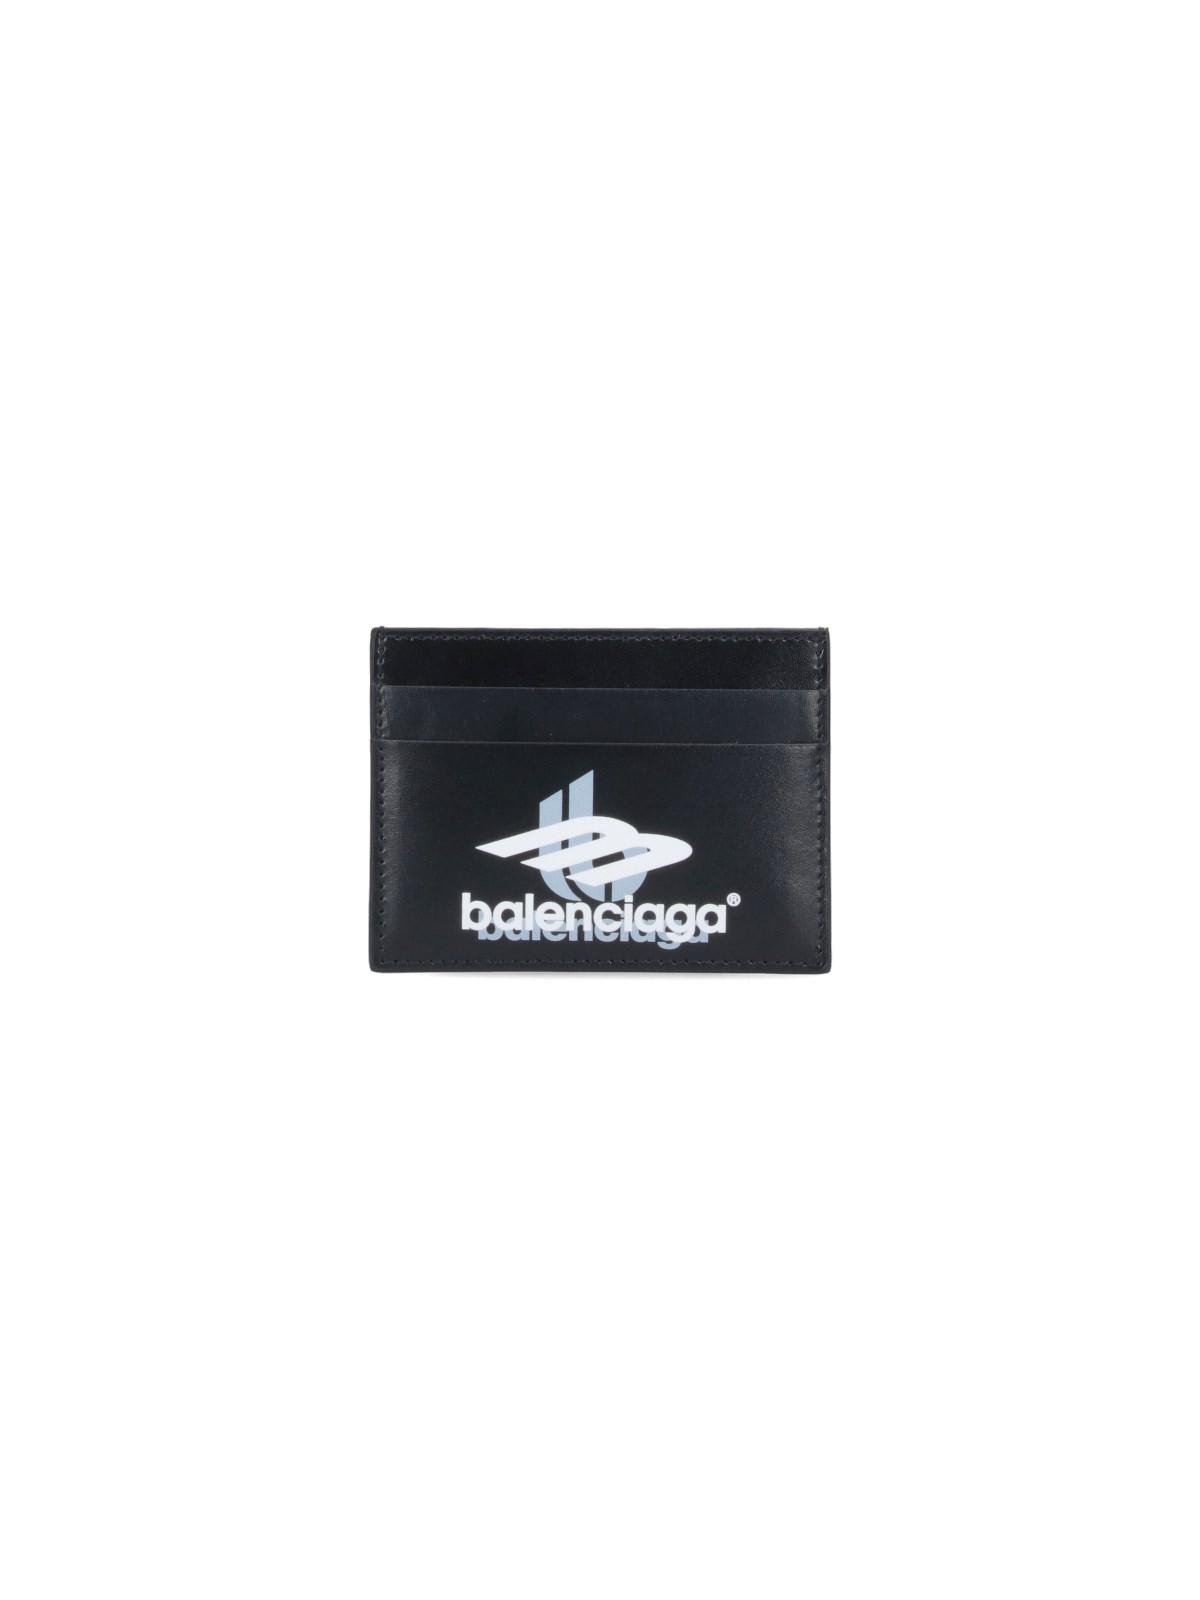 Balenciaga Cash Card Holder In Black/white